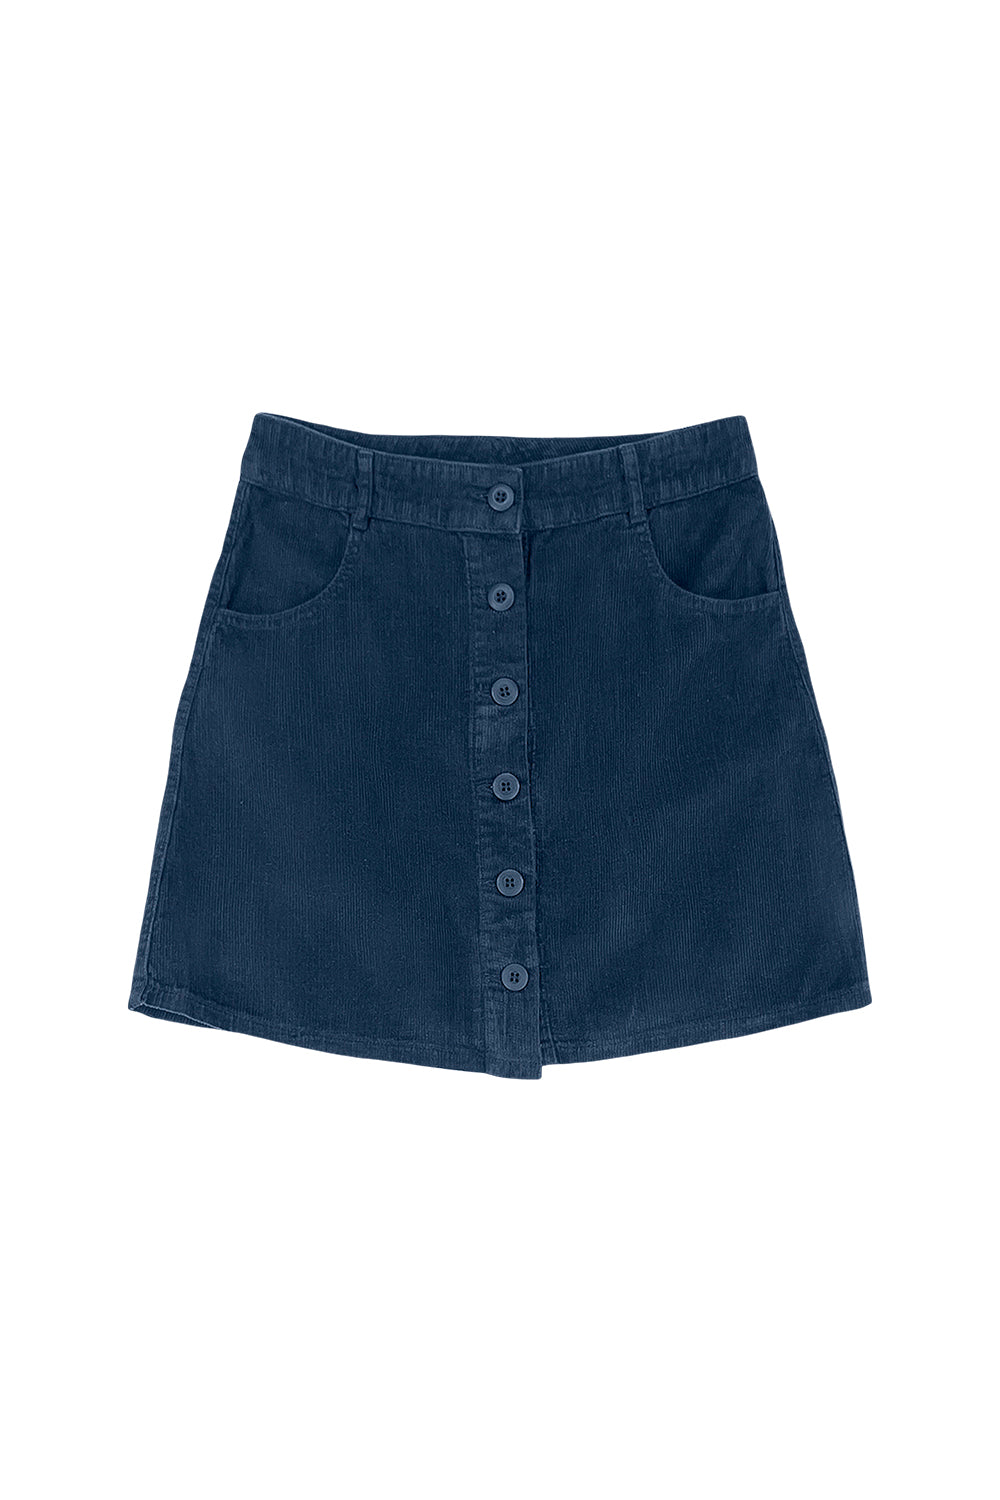 Corduroy Vassar Skirt | Jungmaven Hemp Clothing & Accessories / Color: Navy